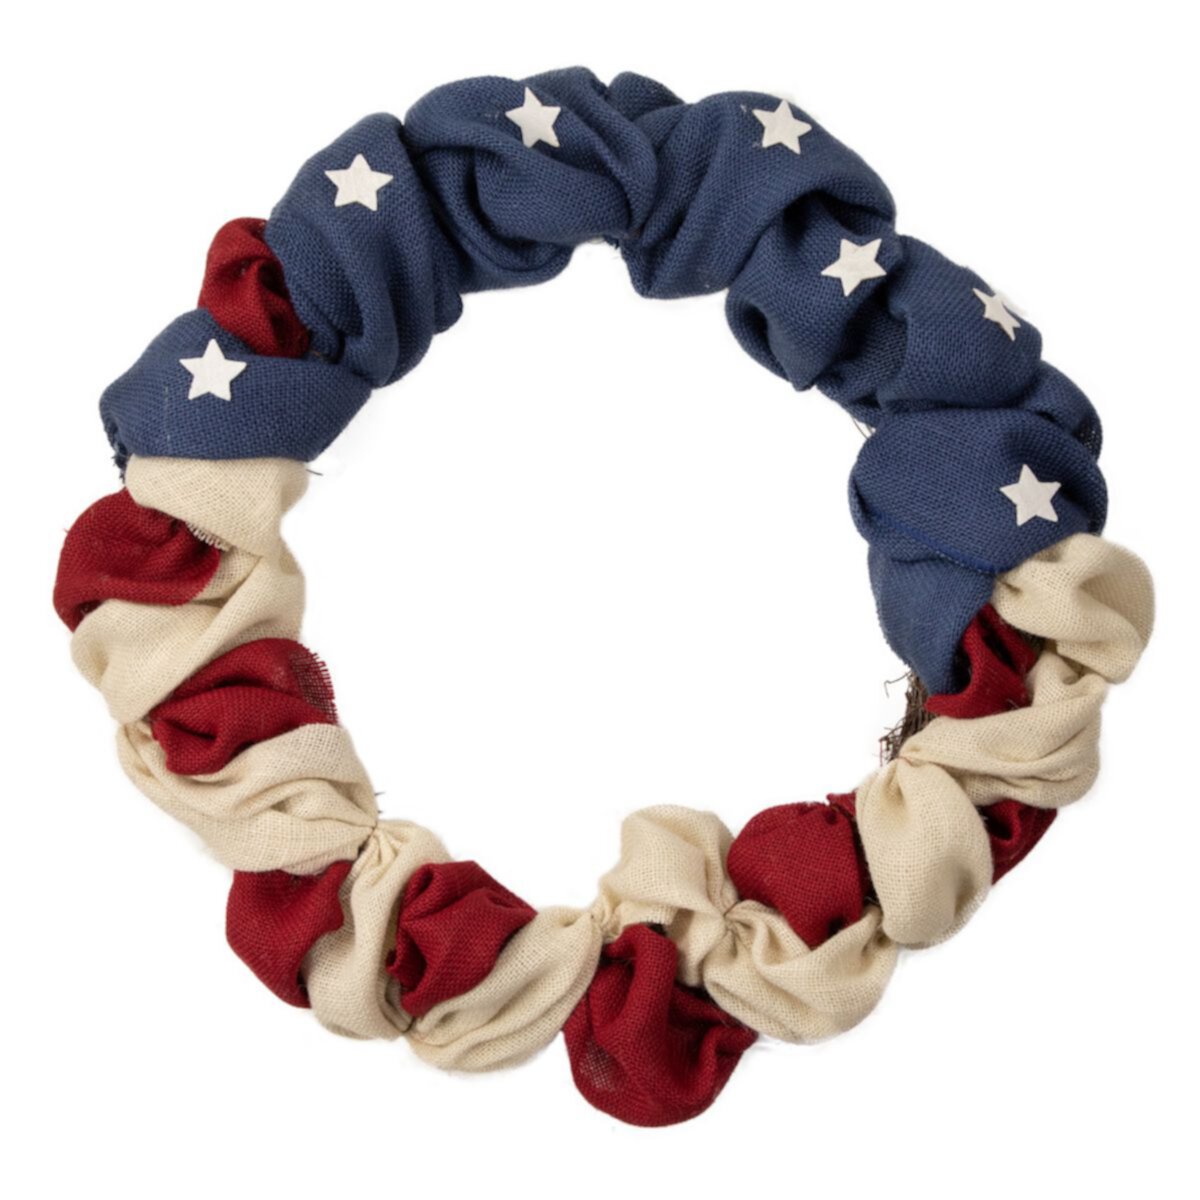 American Stars & Stripes 4th of July Patriotic Wreath Northlight